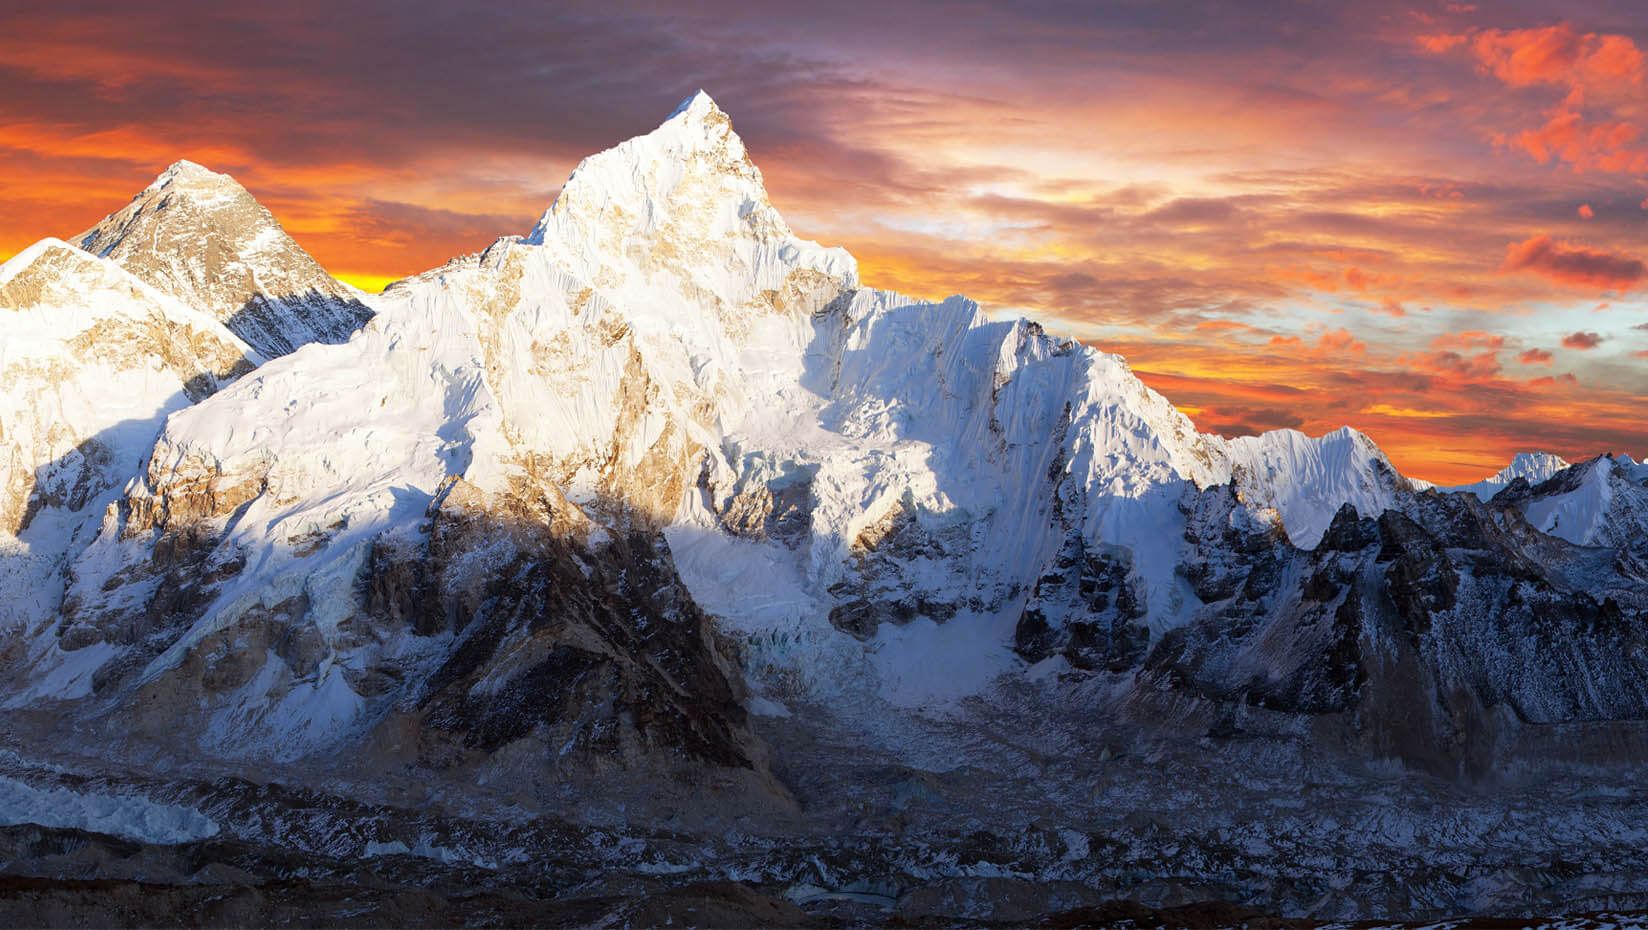 Mount Everest illuminated during sunset